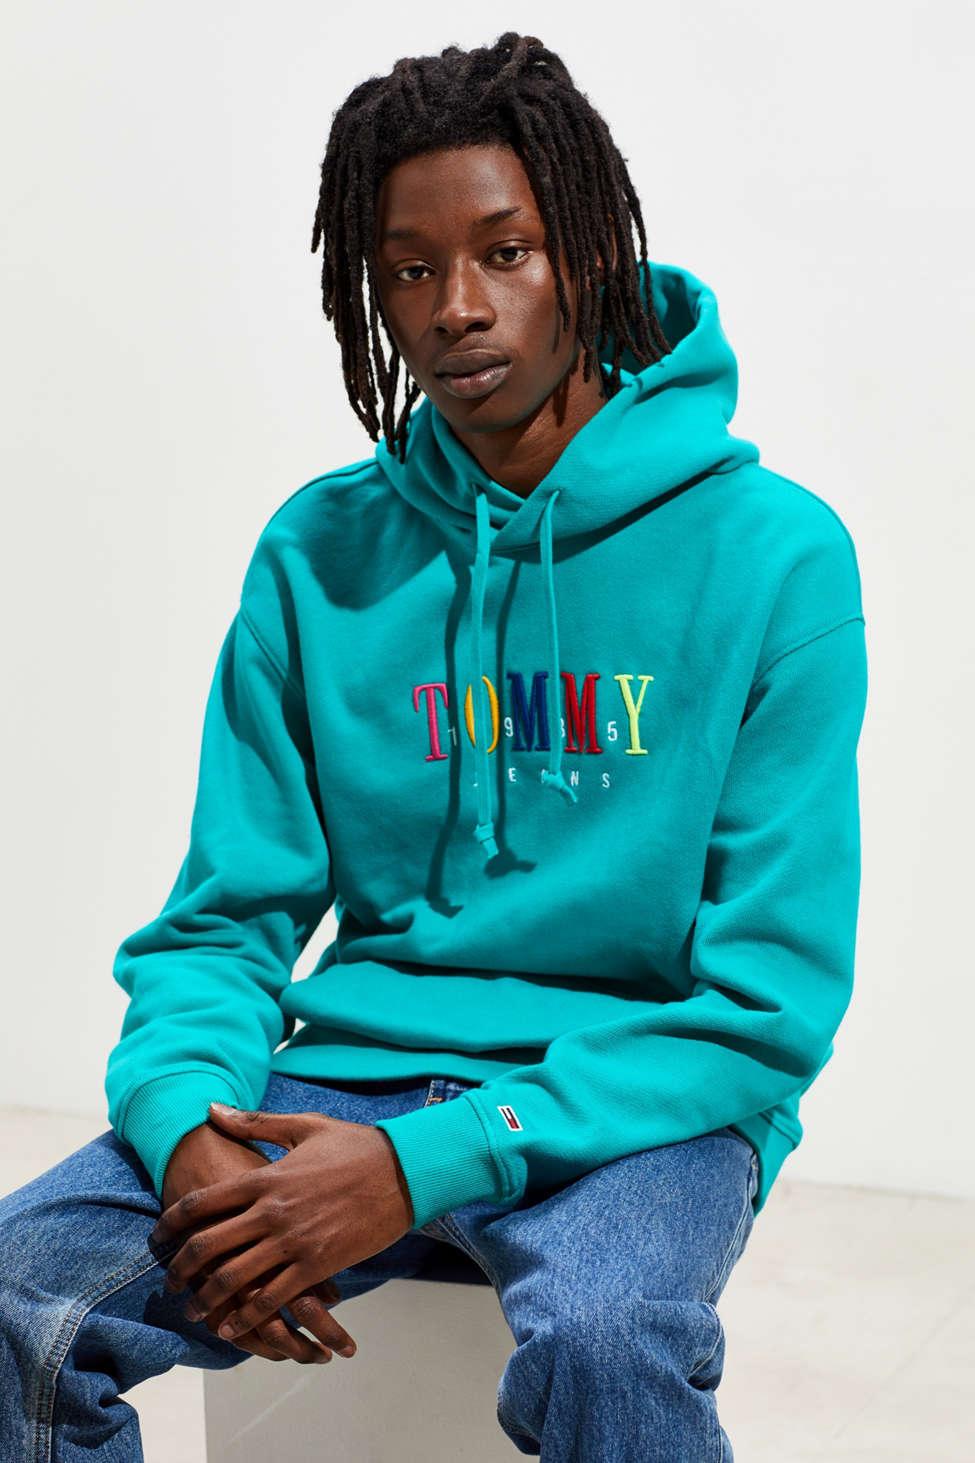 tommy jeans multicolor logo hoodie sweatshirt